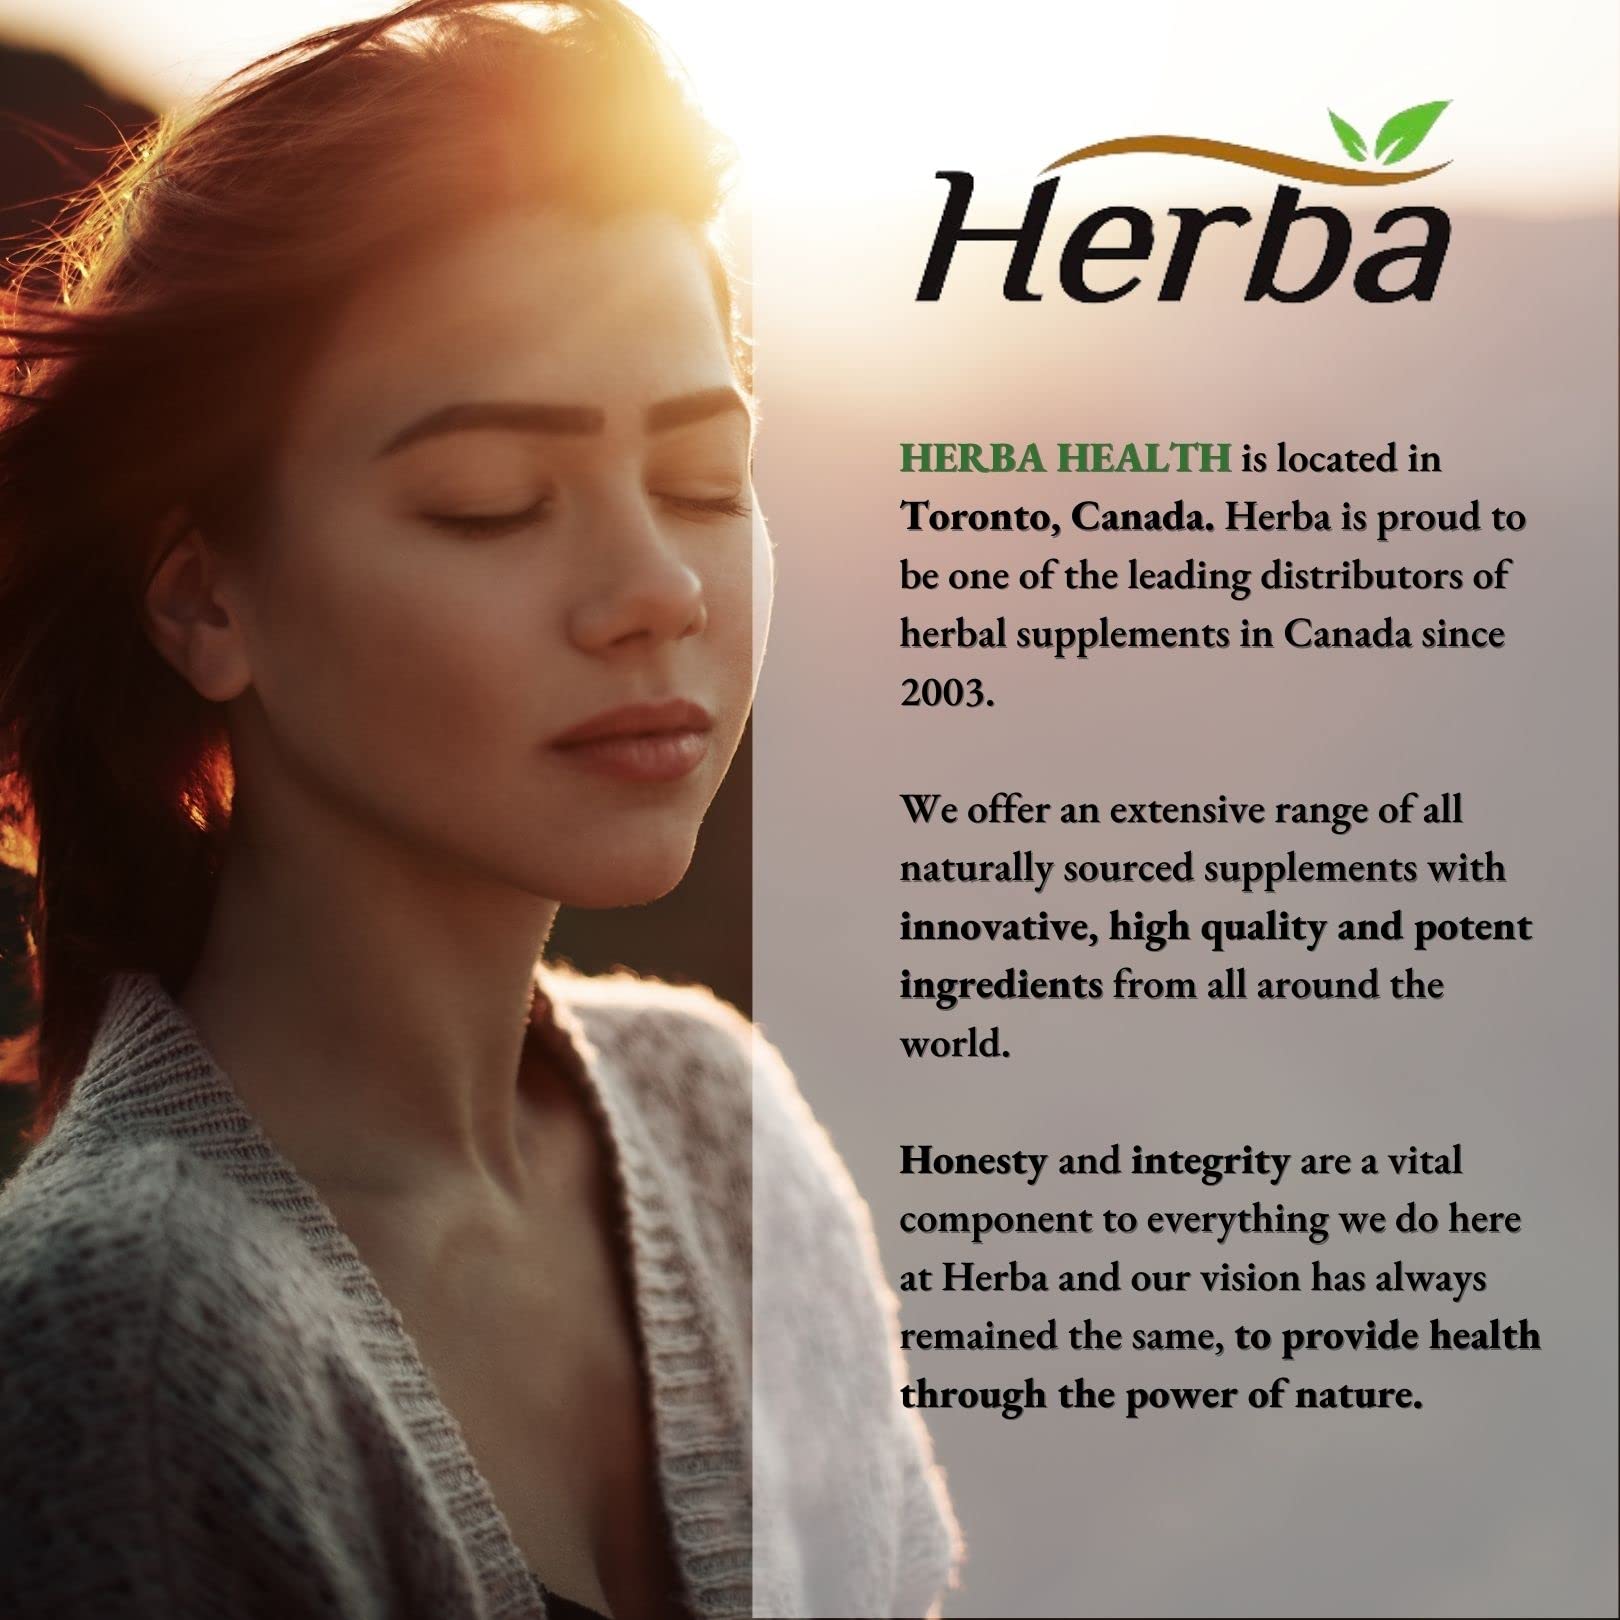 Herba 아스타잔틴 보충제 15mg - 60 식물성 캡슐